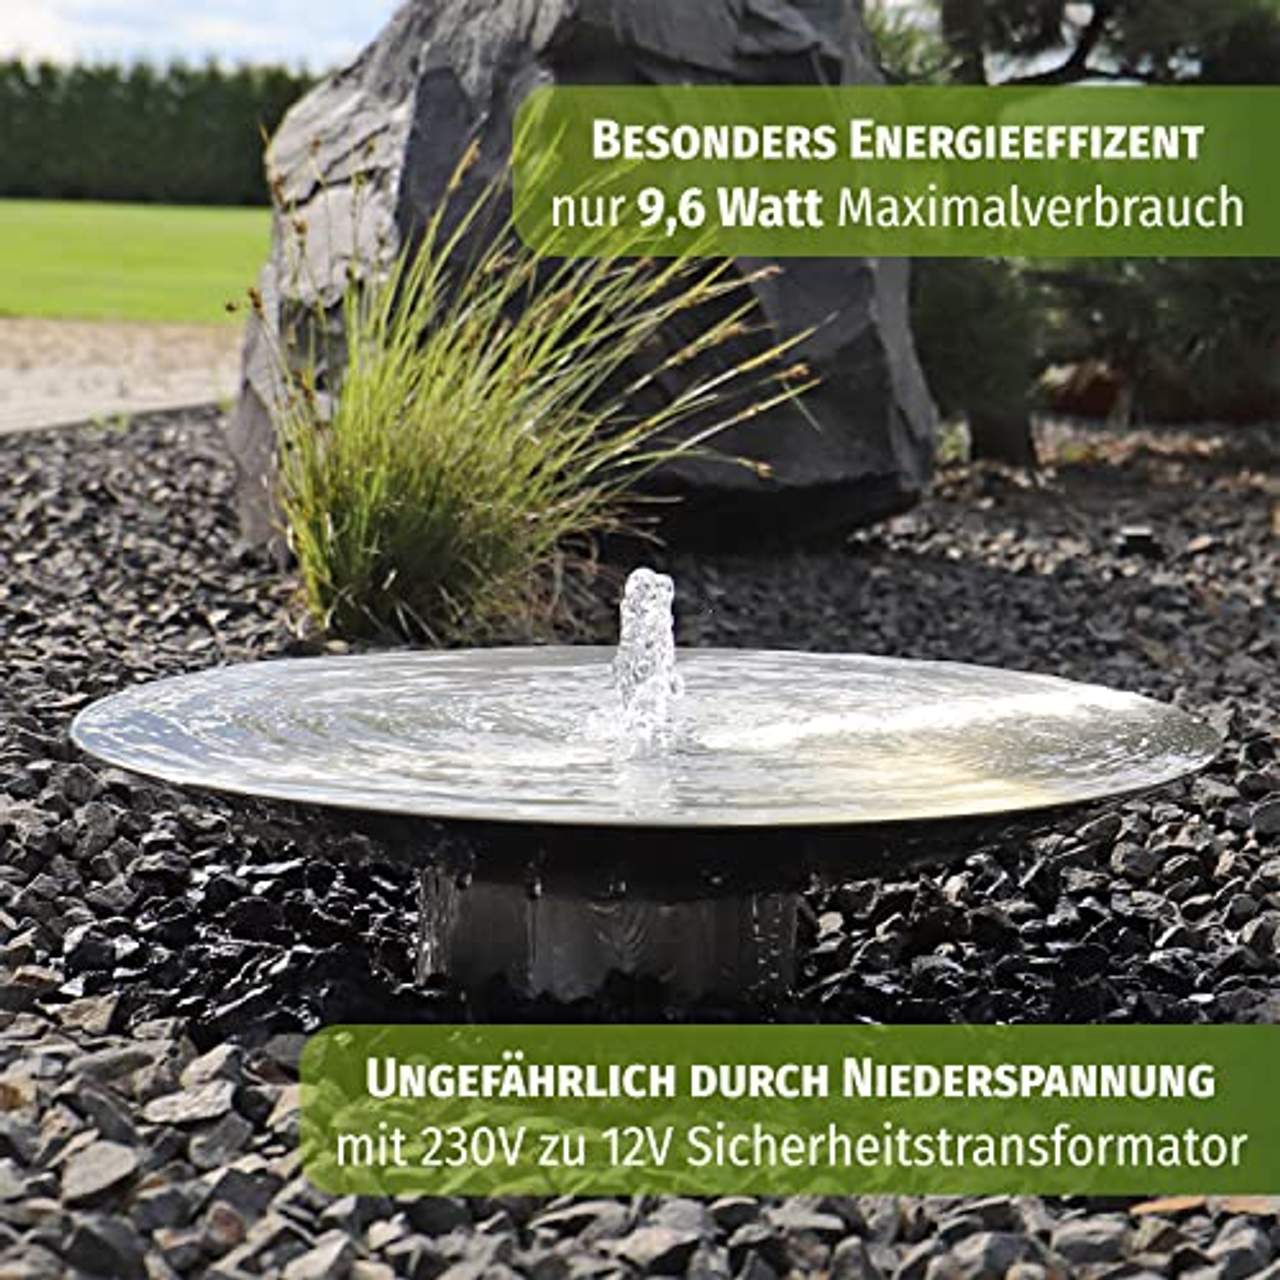 CLGarden Edelstahl Springbrunnen Wasserschale EWS60 Garten Brunnen